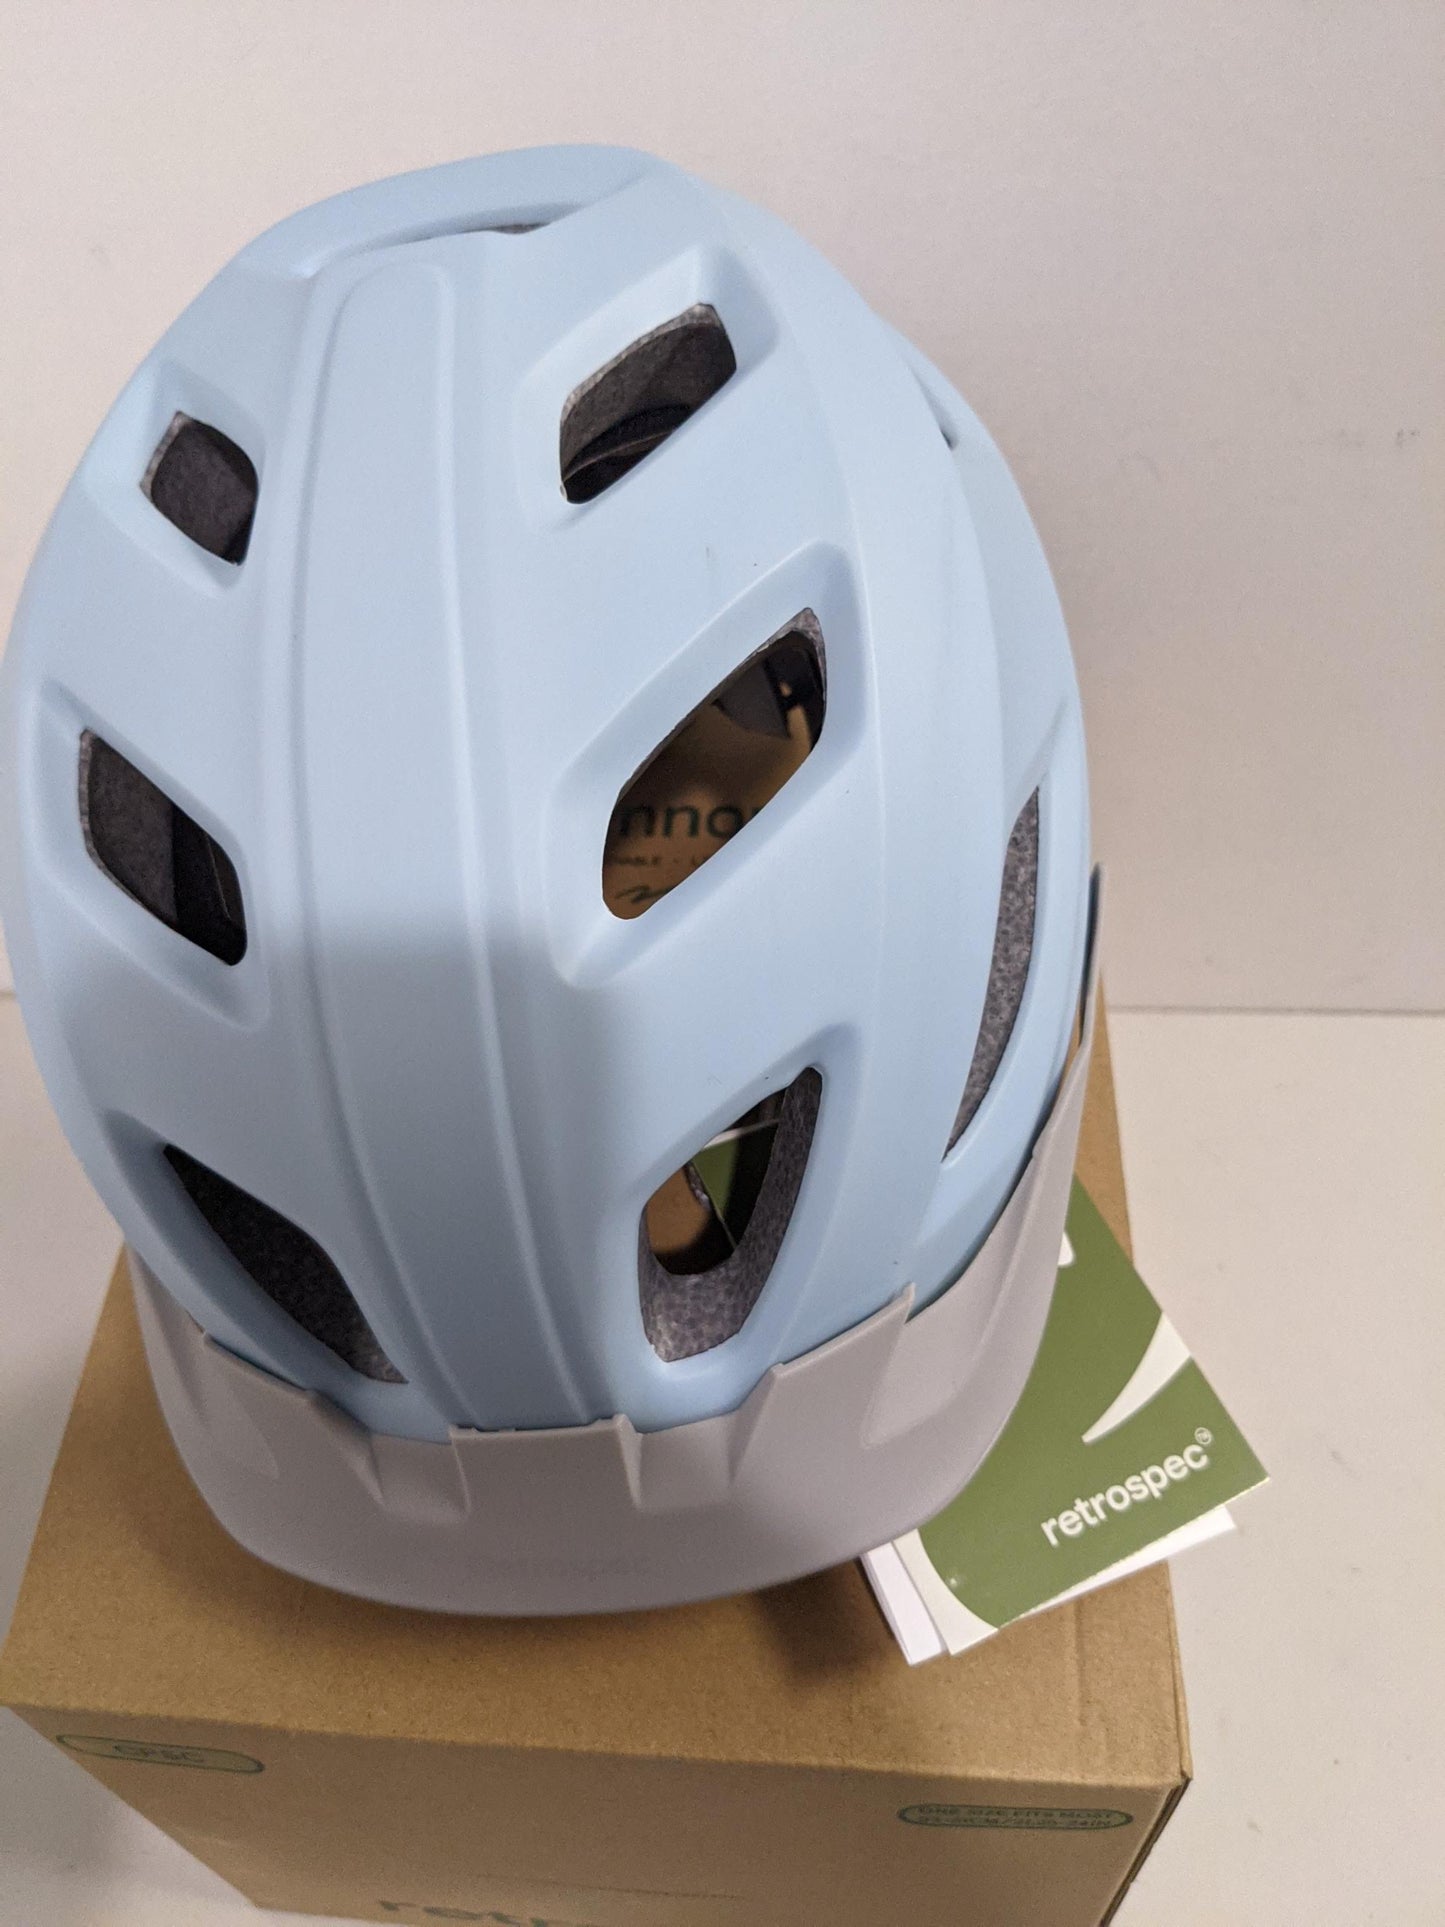 Retrospec Lennon Bike Helmet Condition New Size 54-61cm OSFM Color Blue